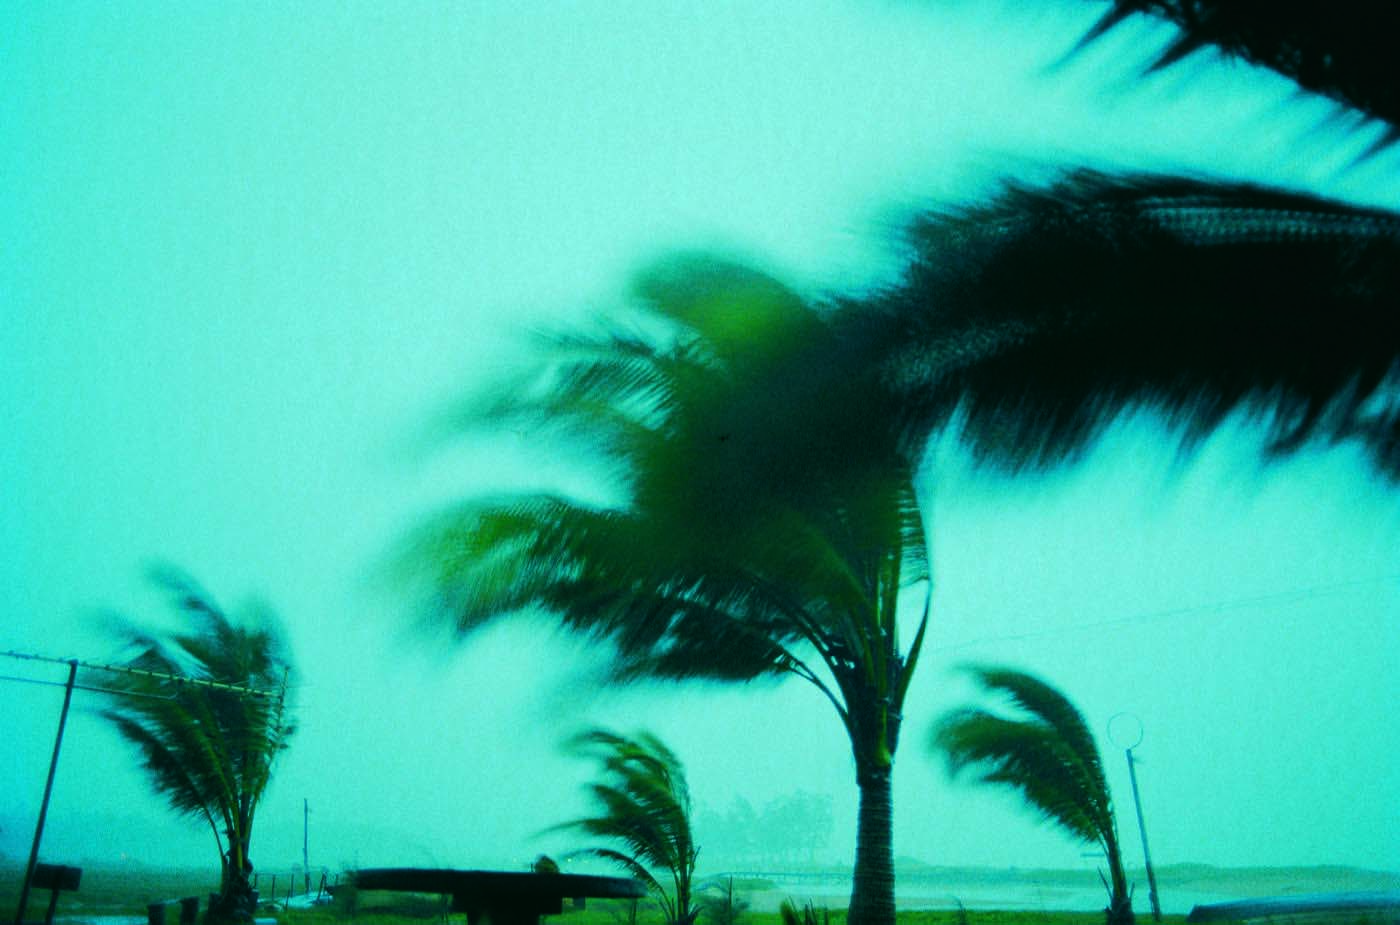 a blurry image of a palm tree